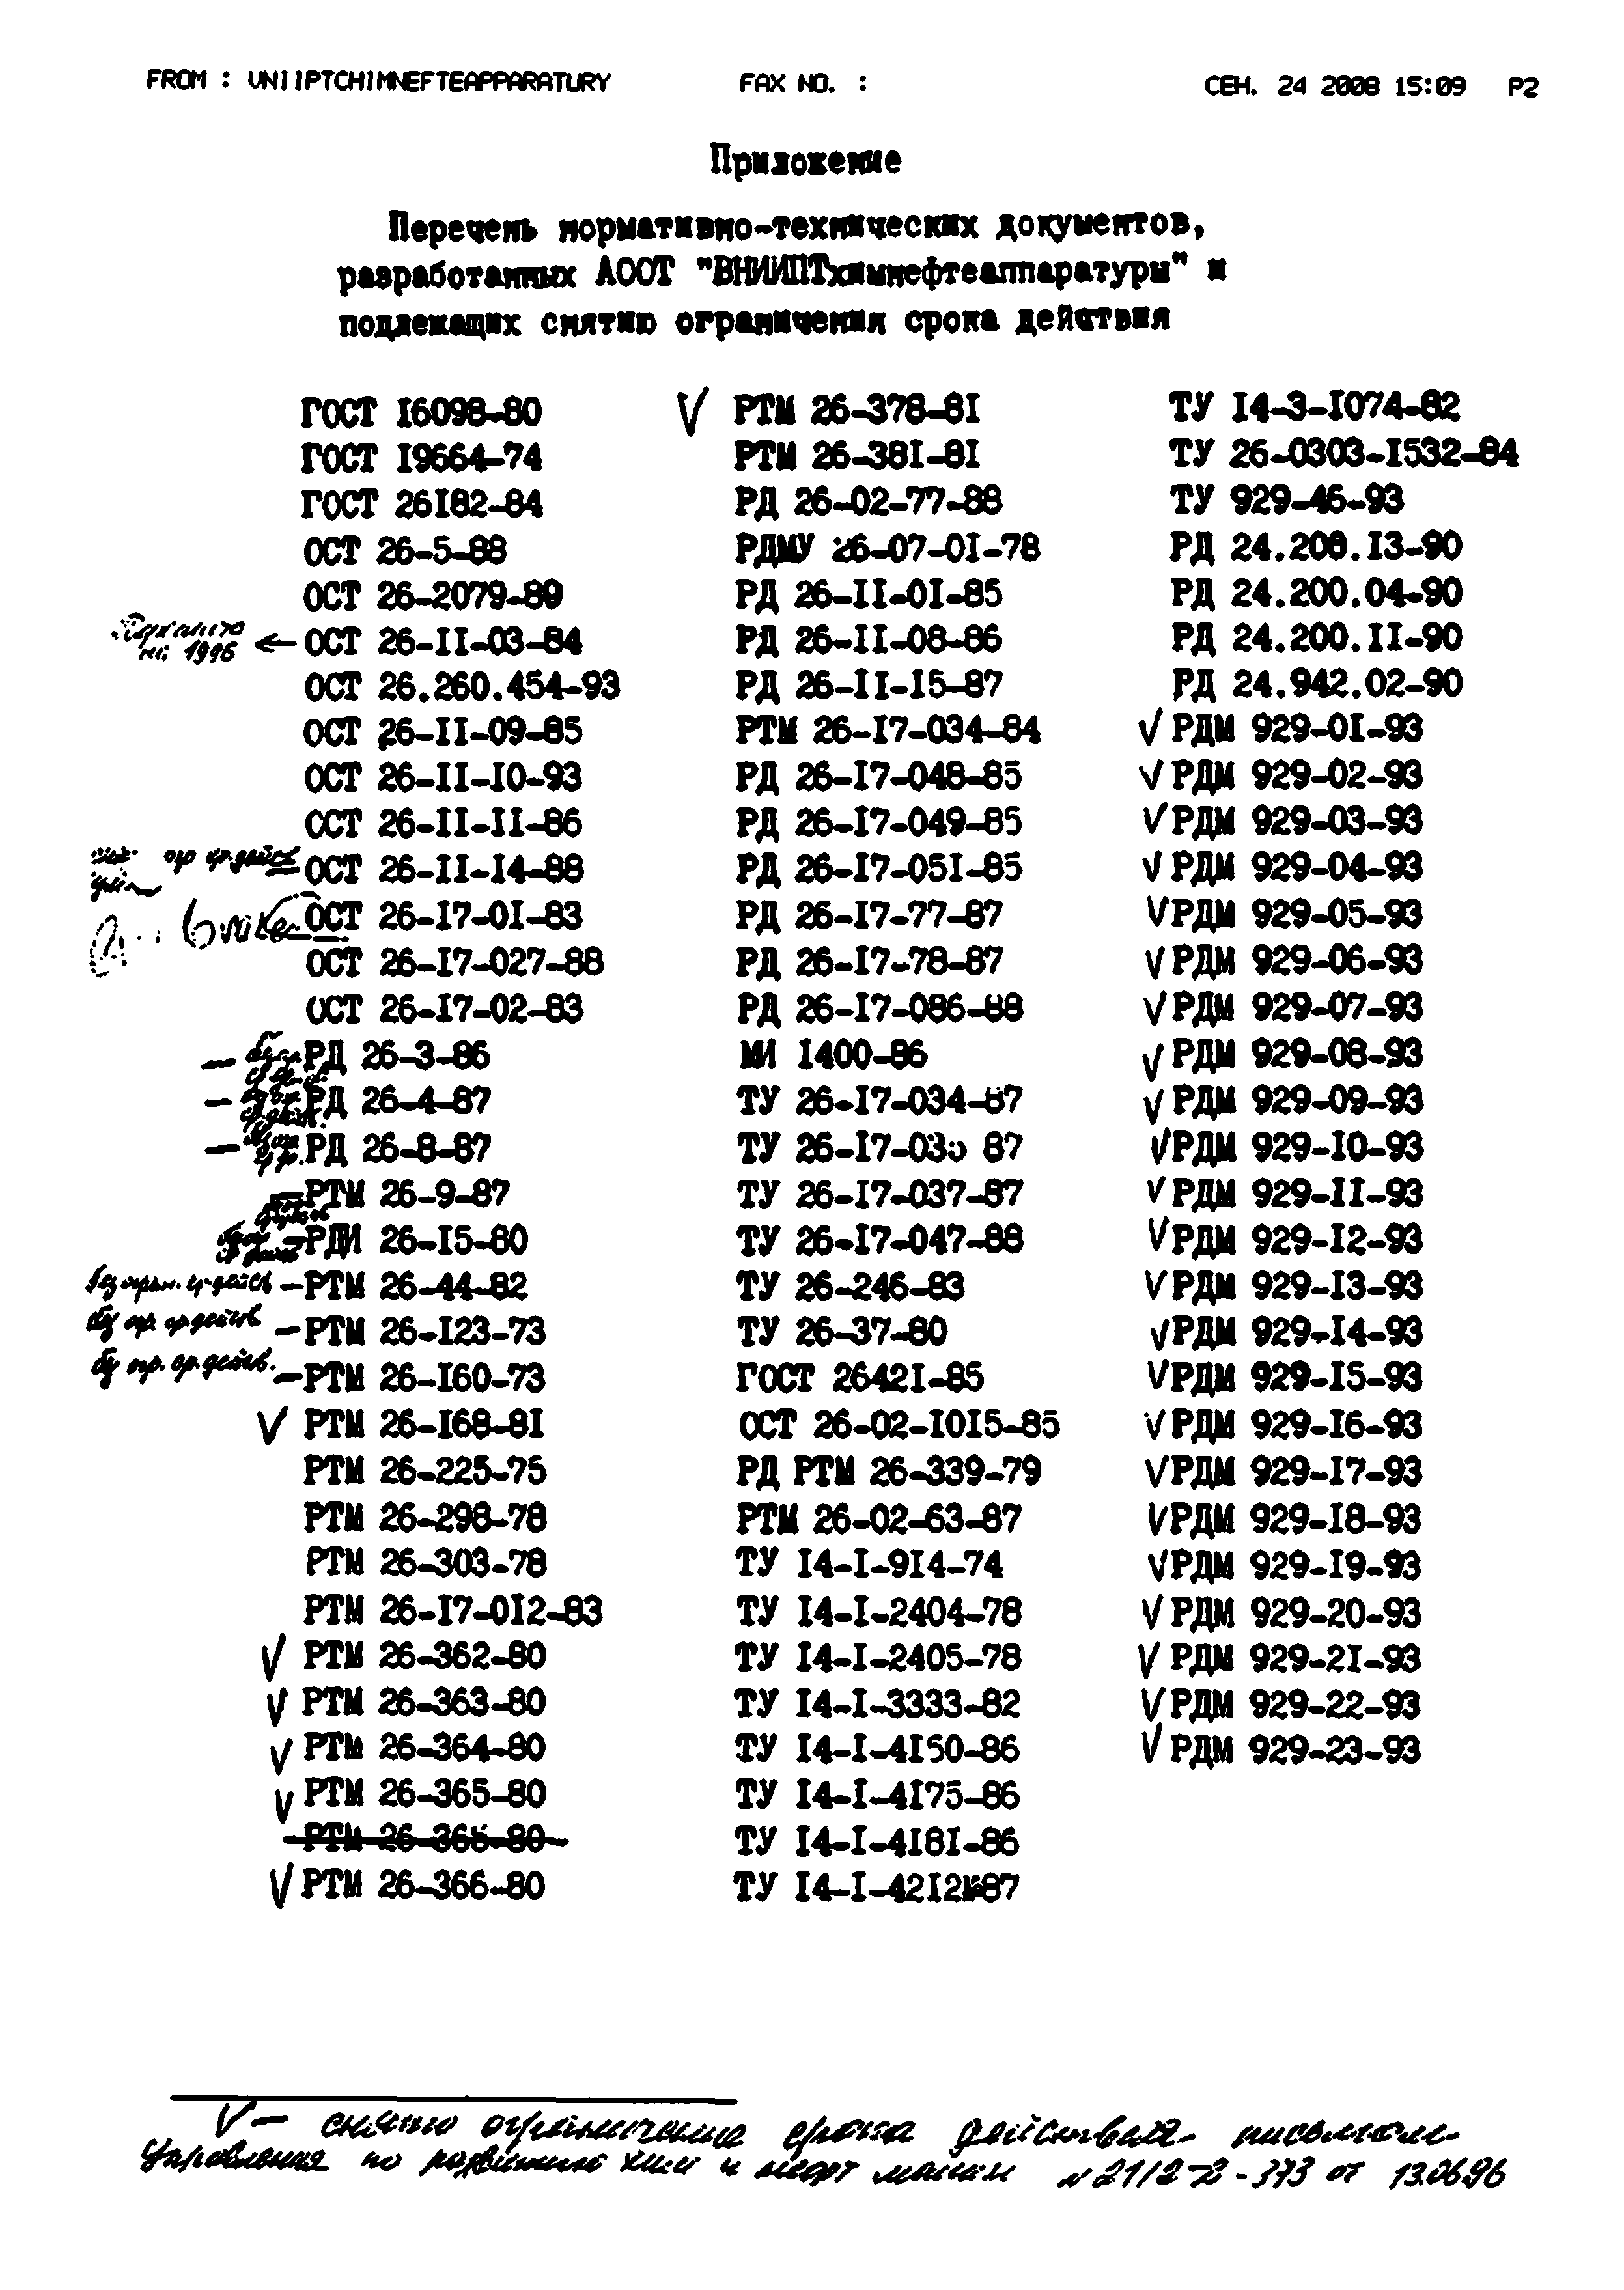 РДМ 929-15-93